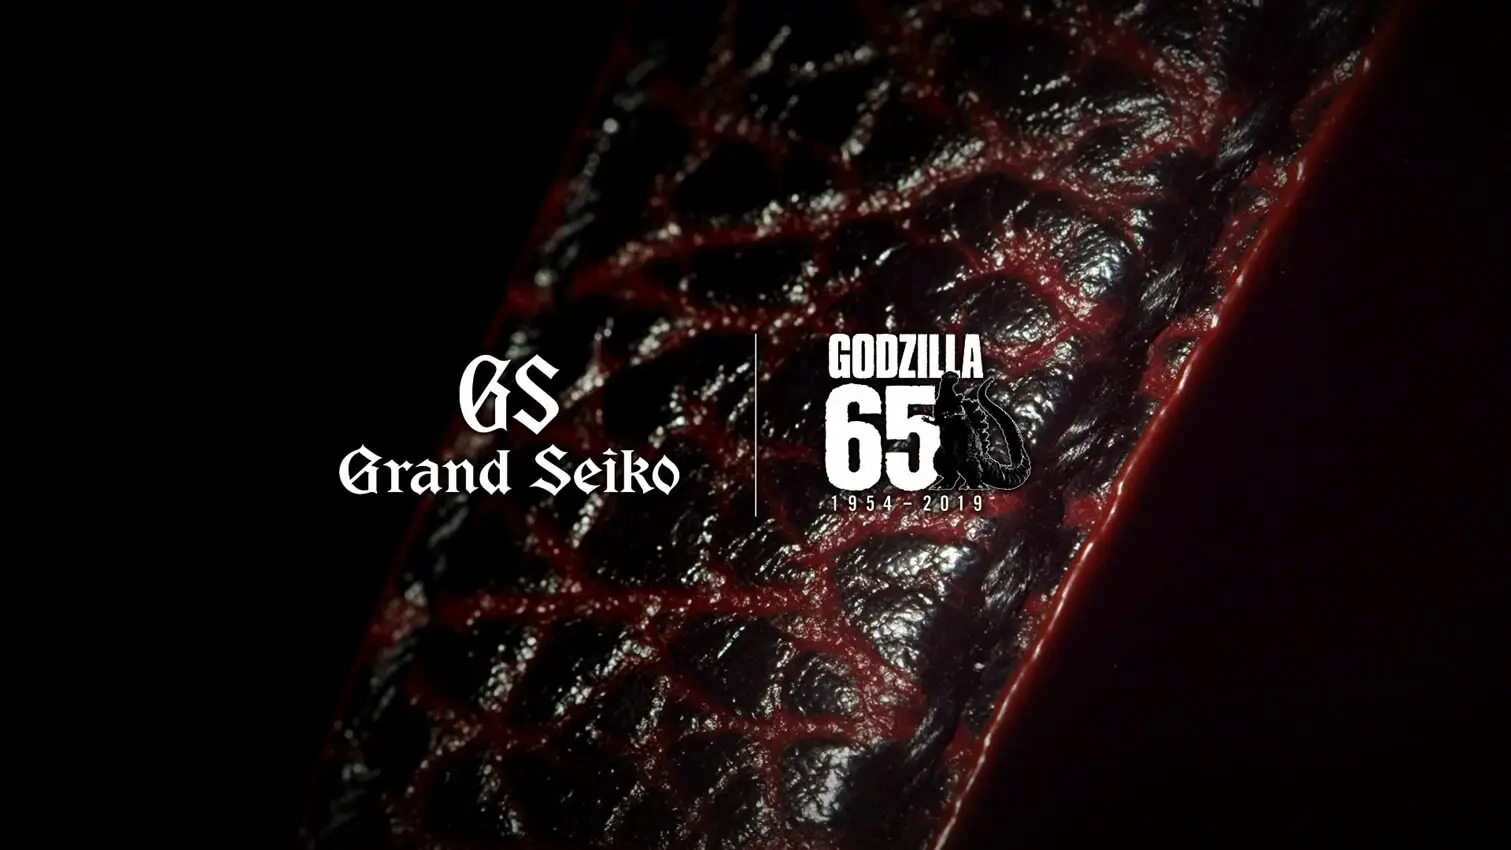 GRAND SEIKO Godzilla 65th Anniversary Limited Edition